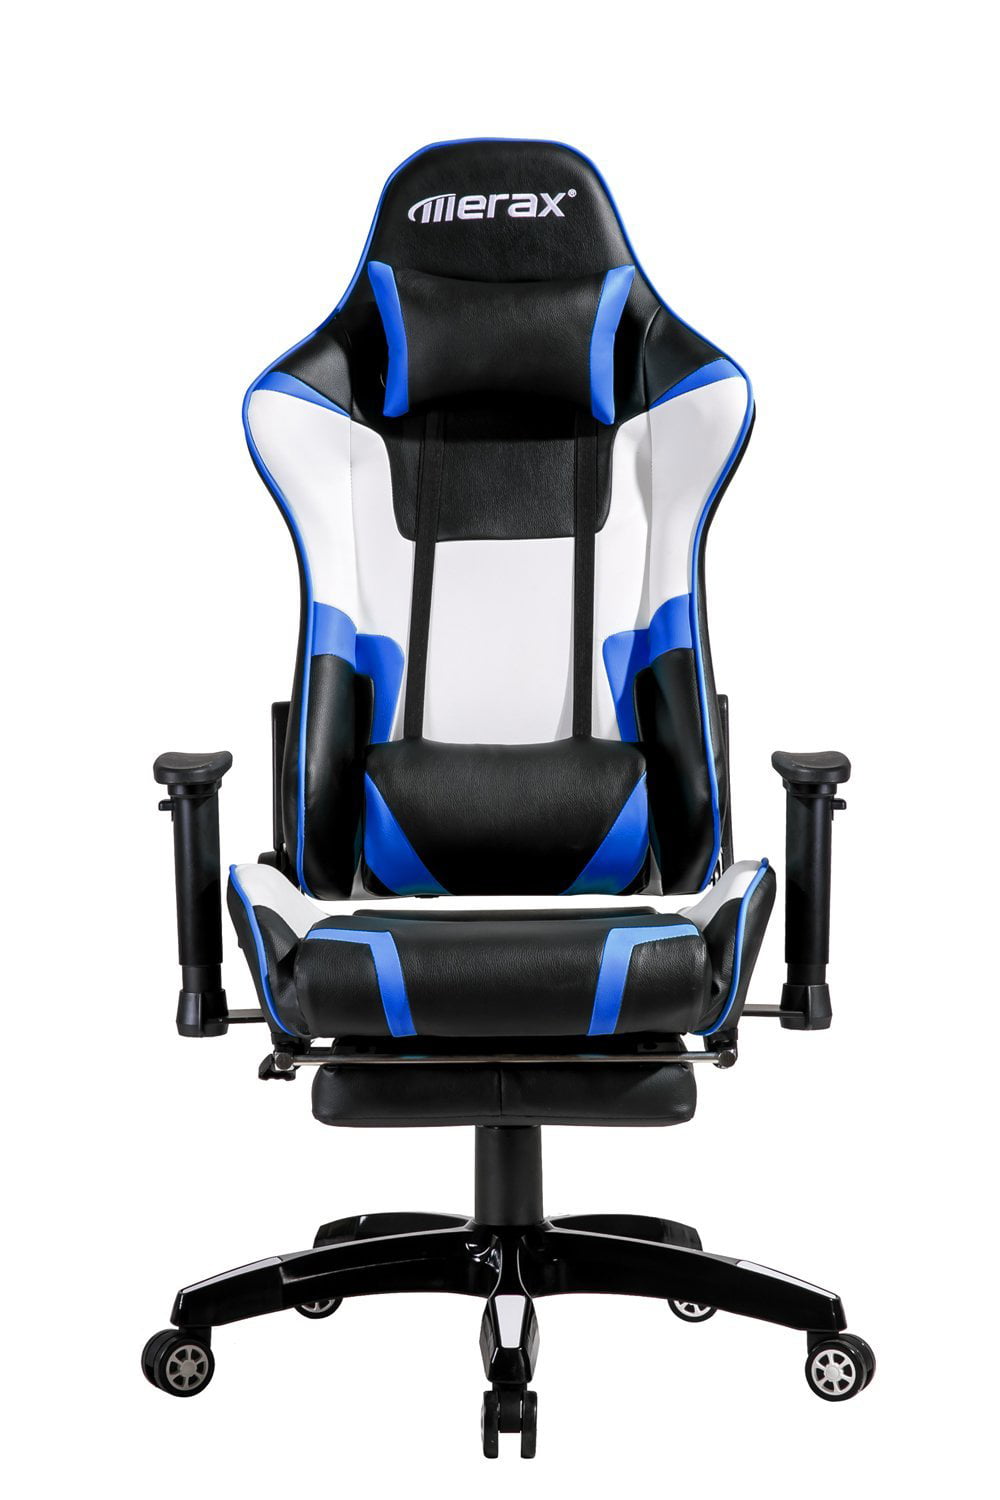 Merax Executive Swivel Gaming Chair HighBack Racing Chair